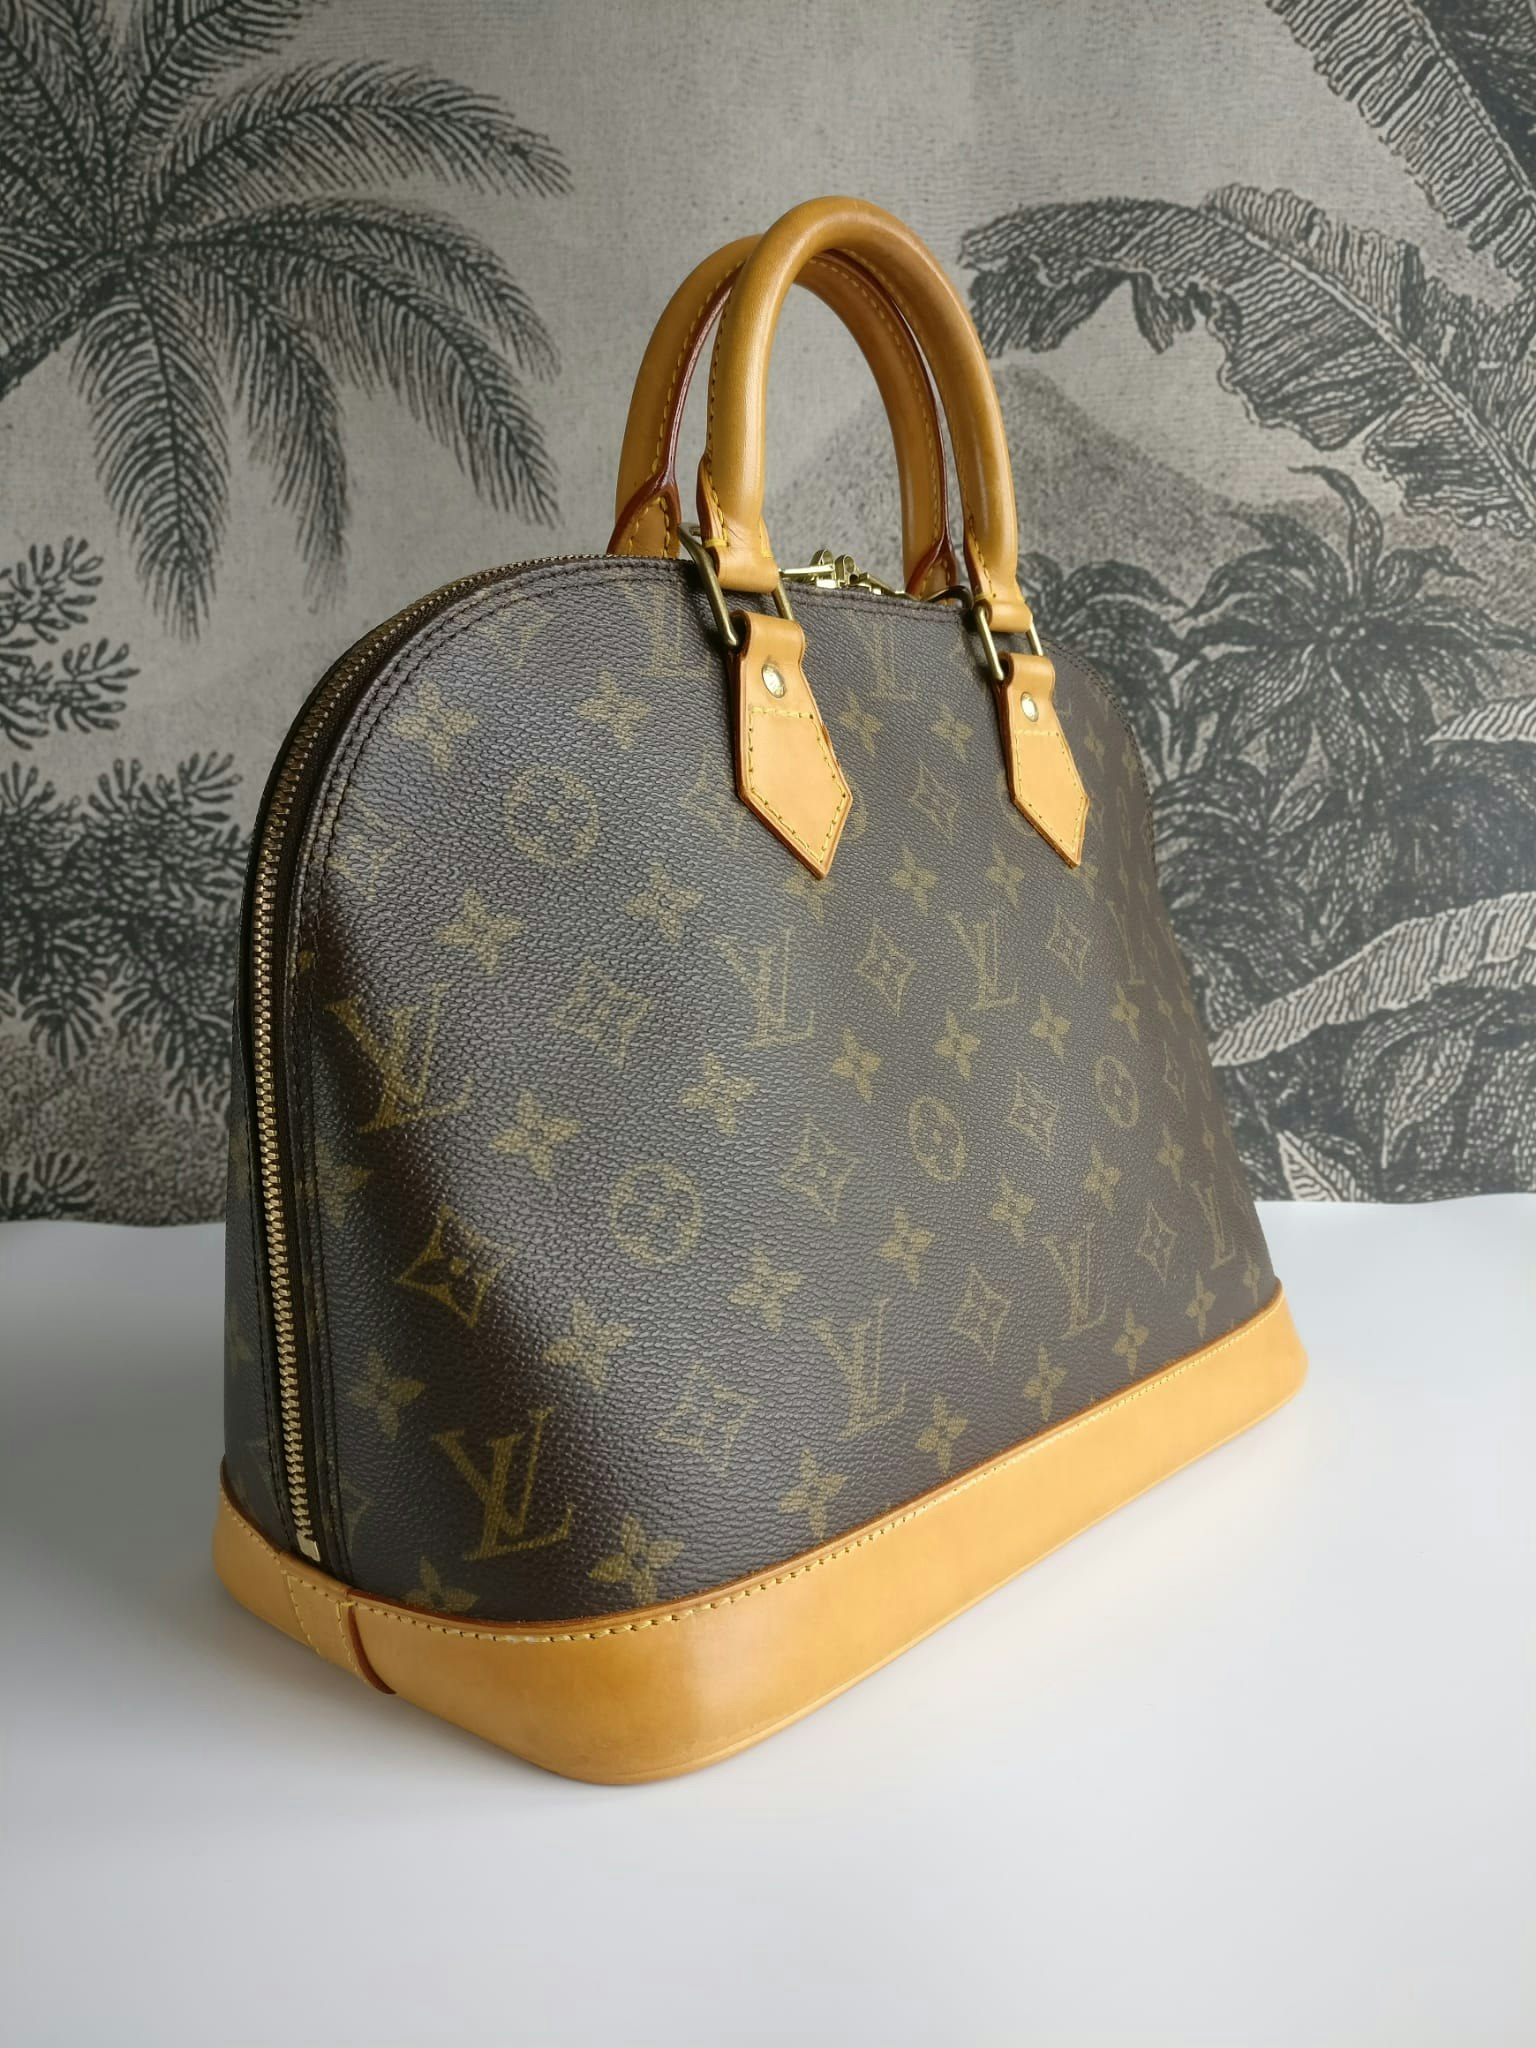 Louis Vuitton Alma PM - Good or Bag